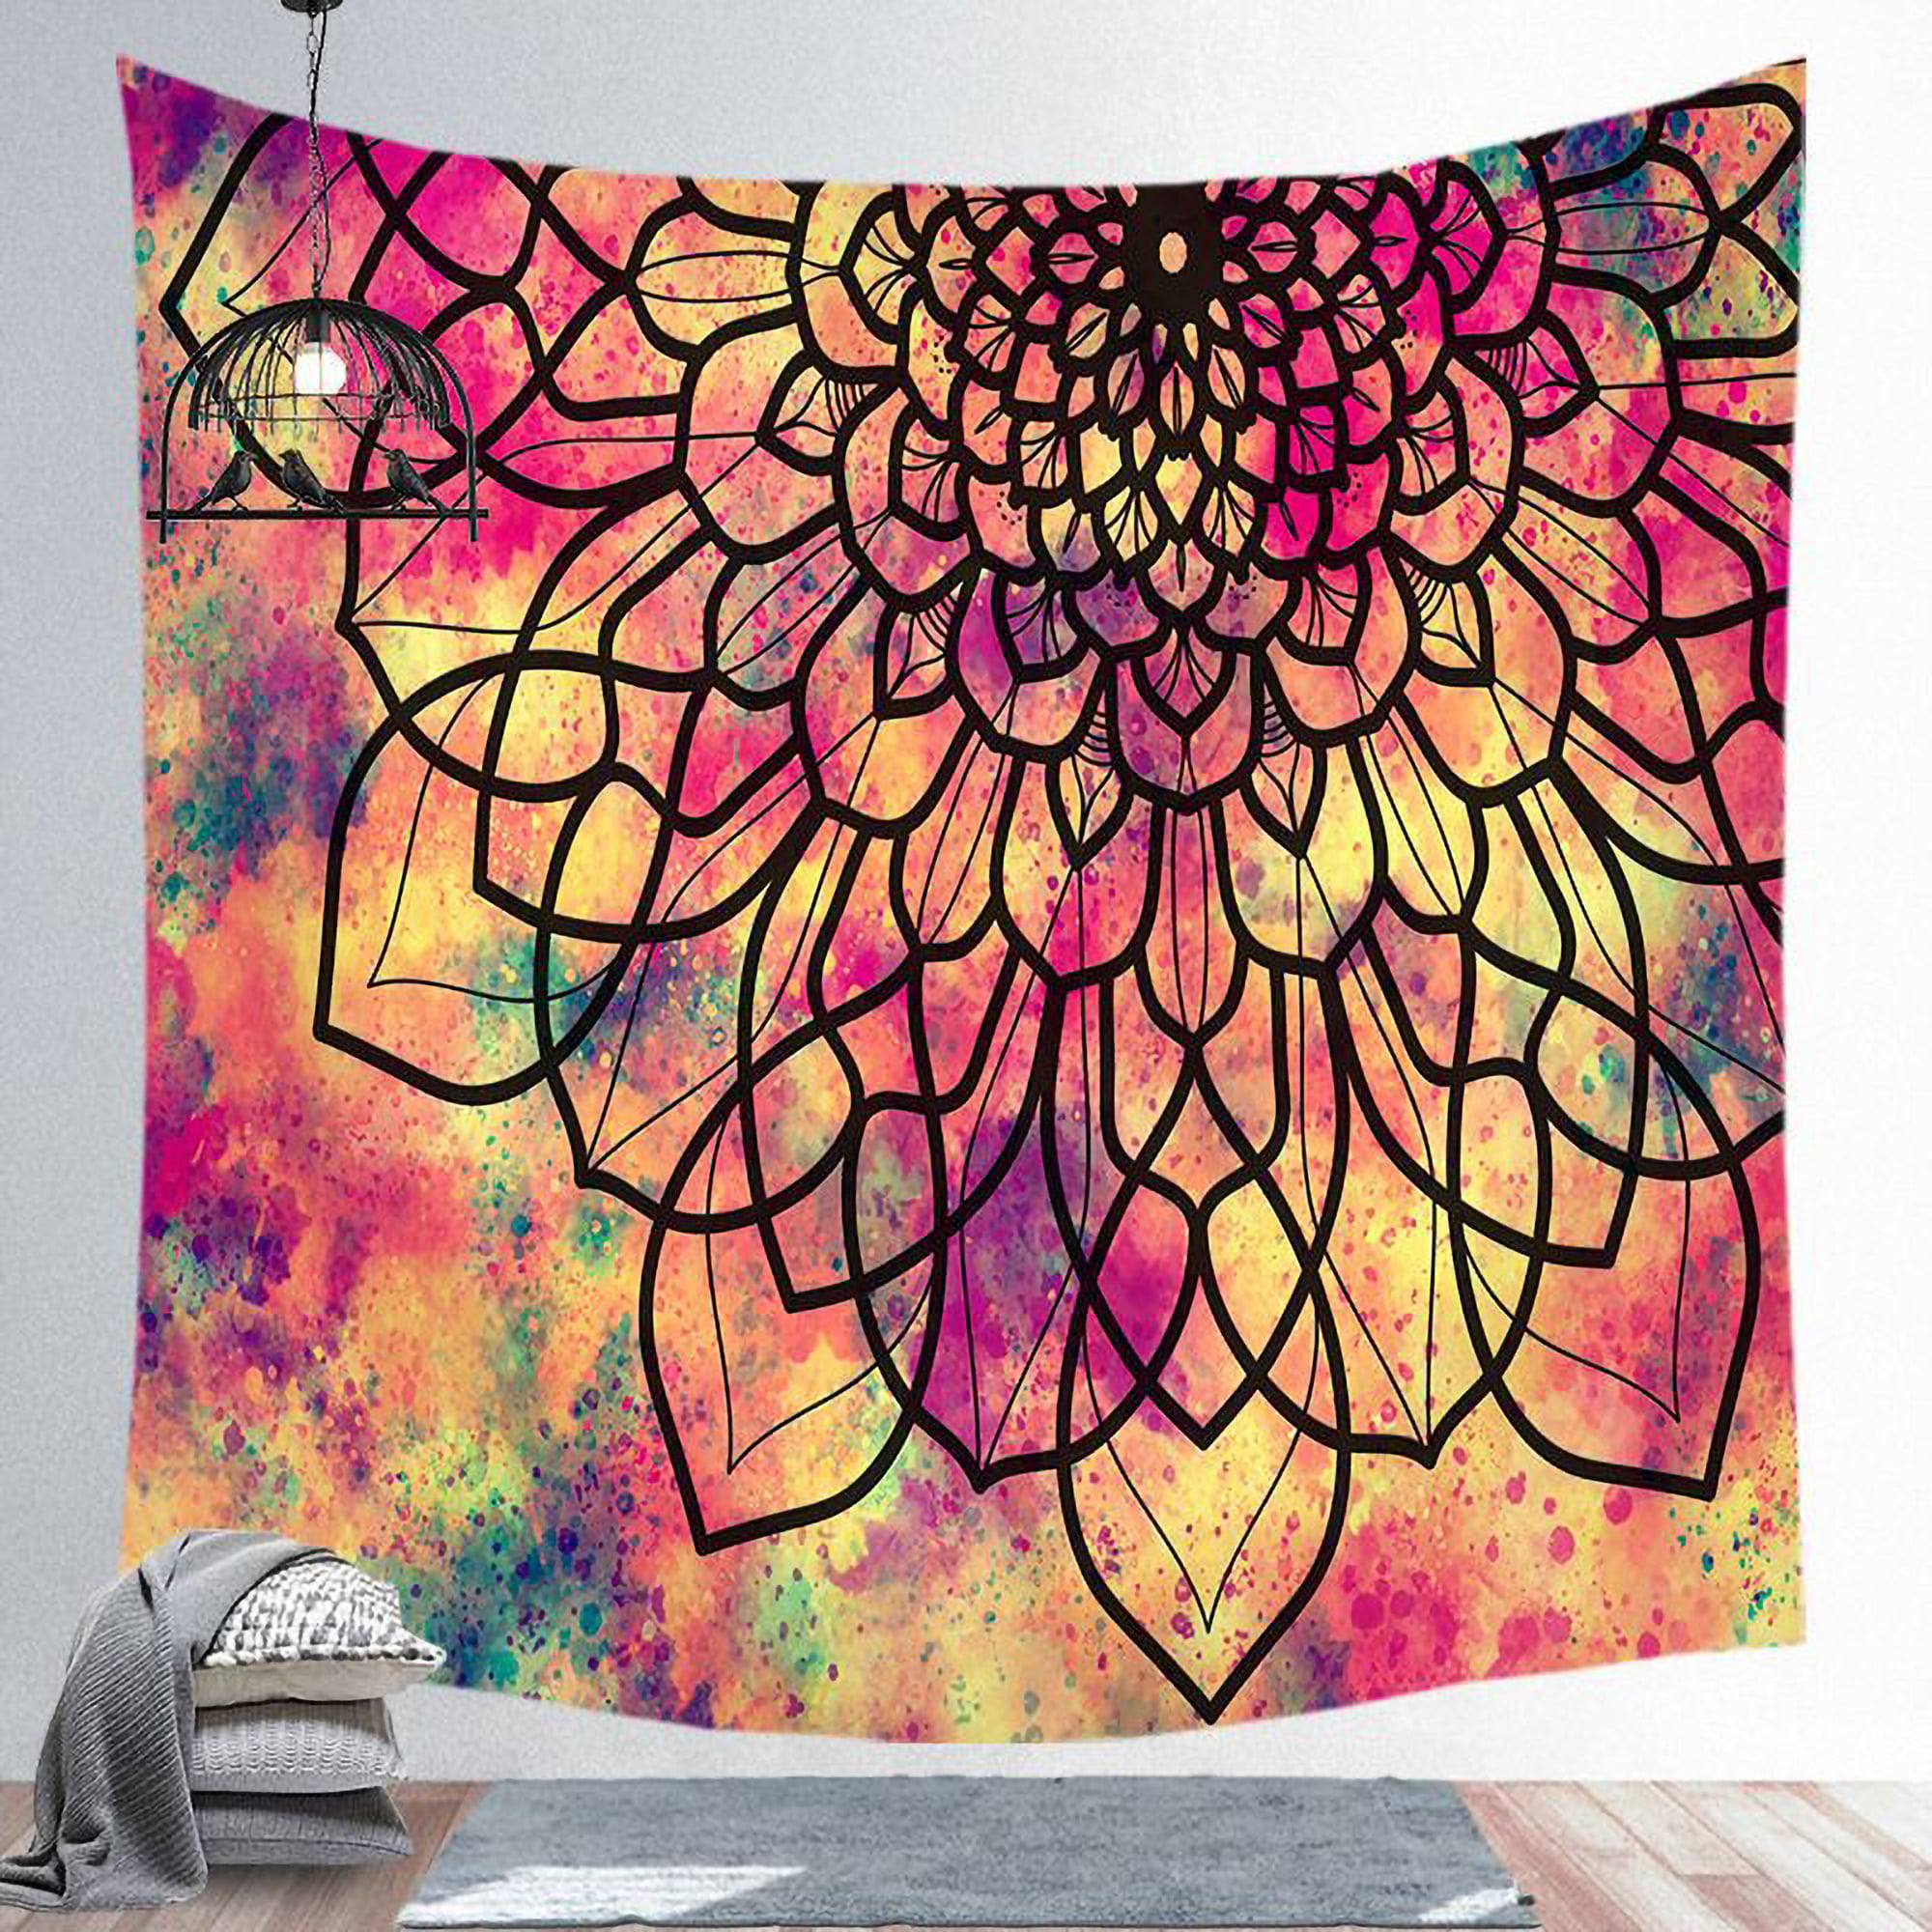 Capreze Blanket Bohemian Home Decoration Hippie Decorative Tapestry Wall  Hanging Boho Floral Print Aesthetic Style-K 59x79 